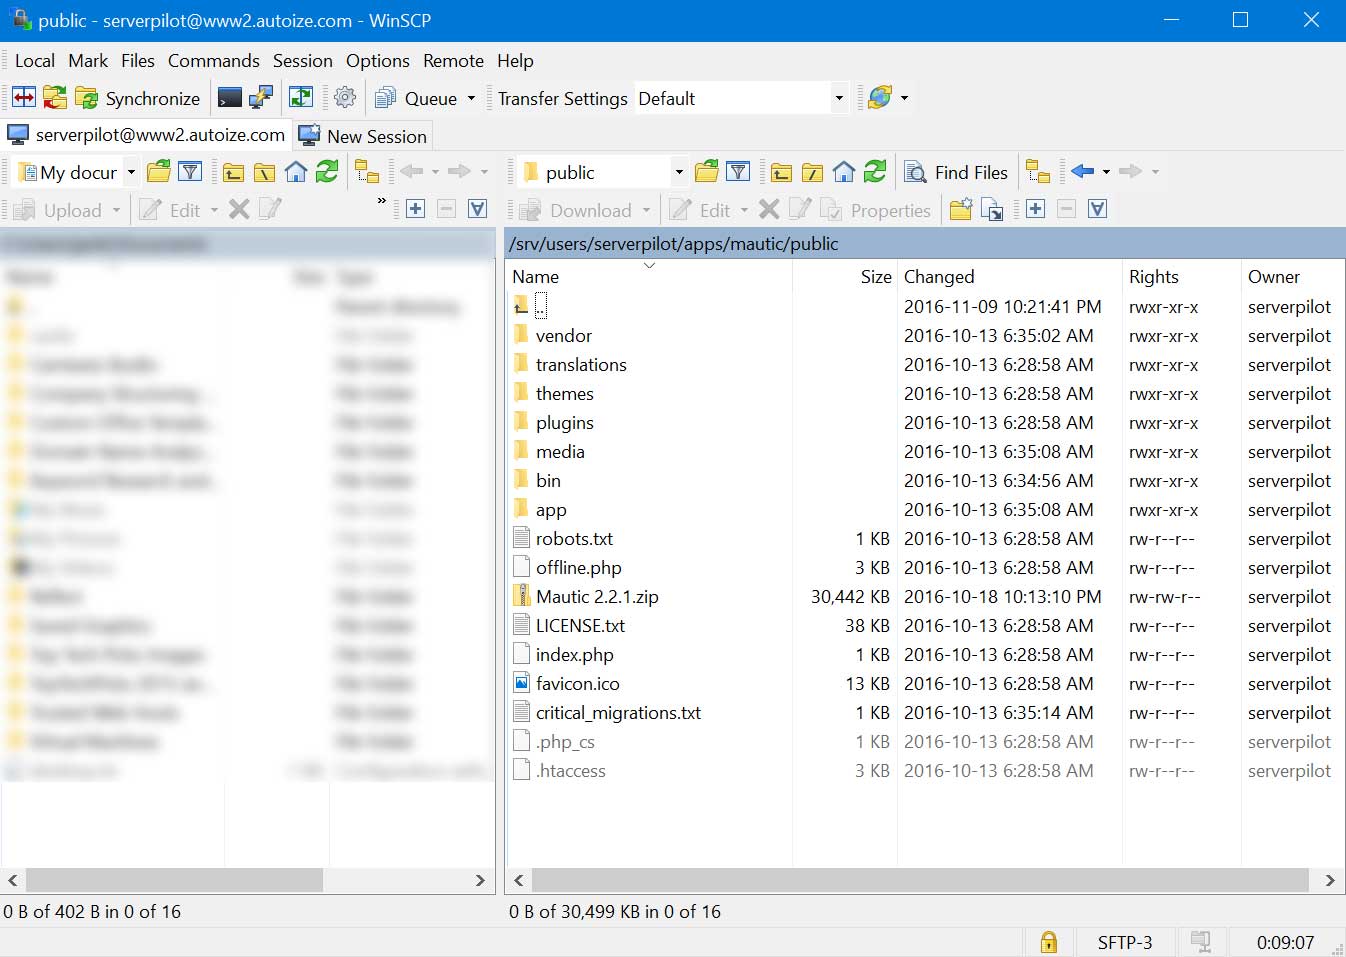 Upload Mautic files in WinSCP